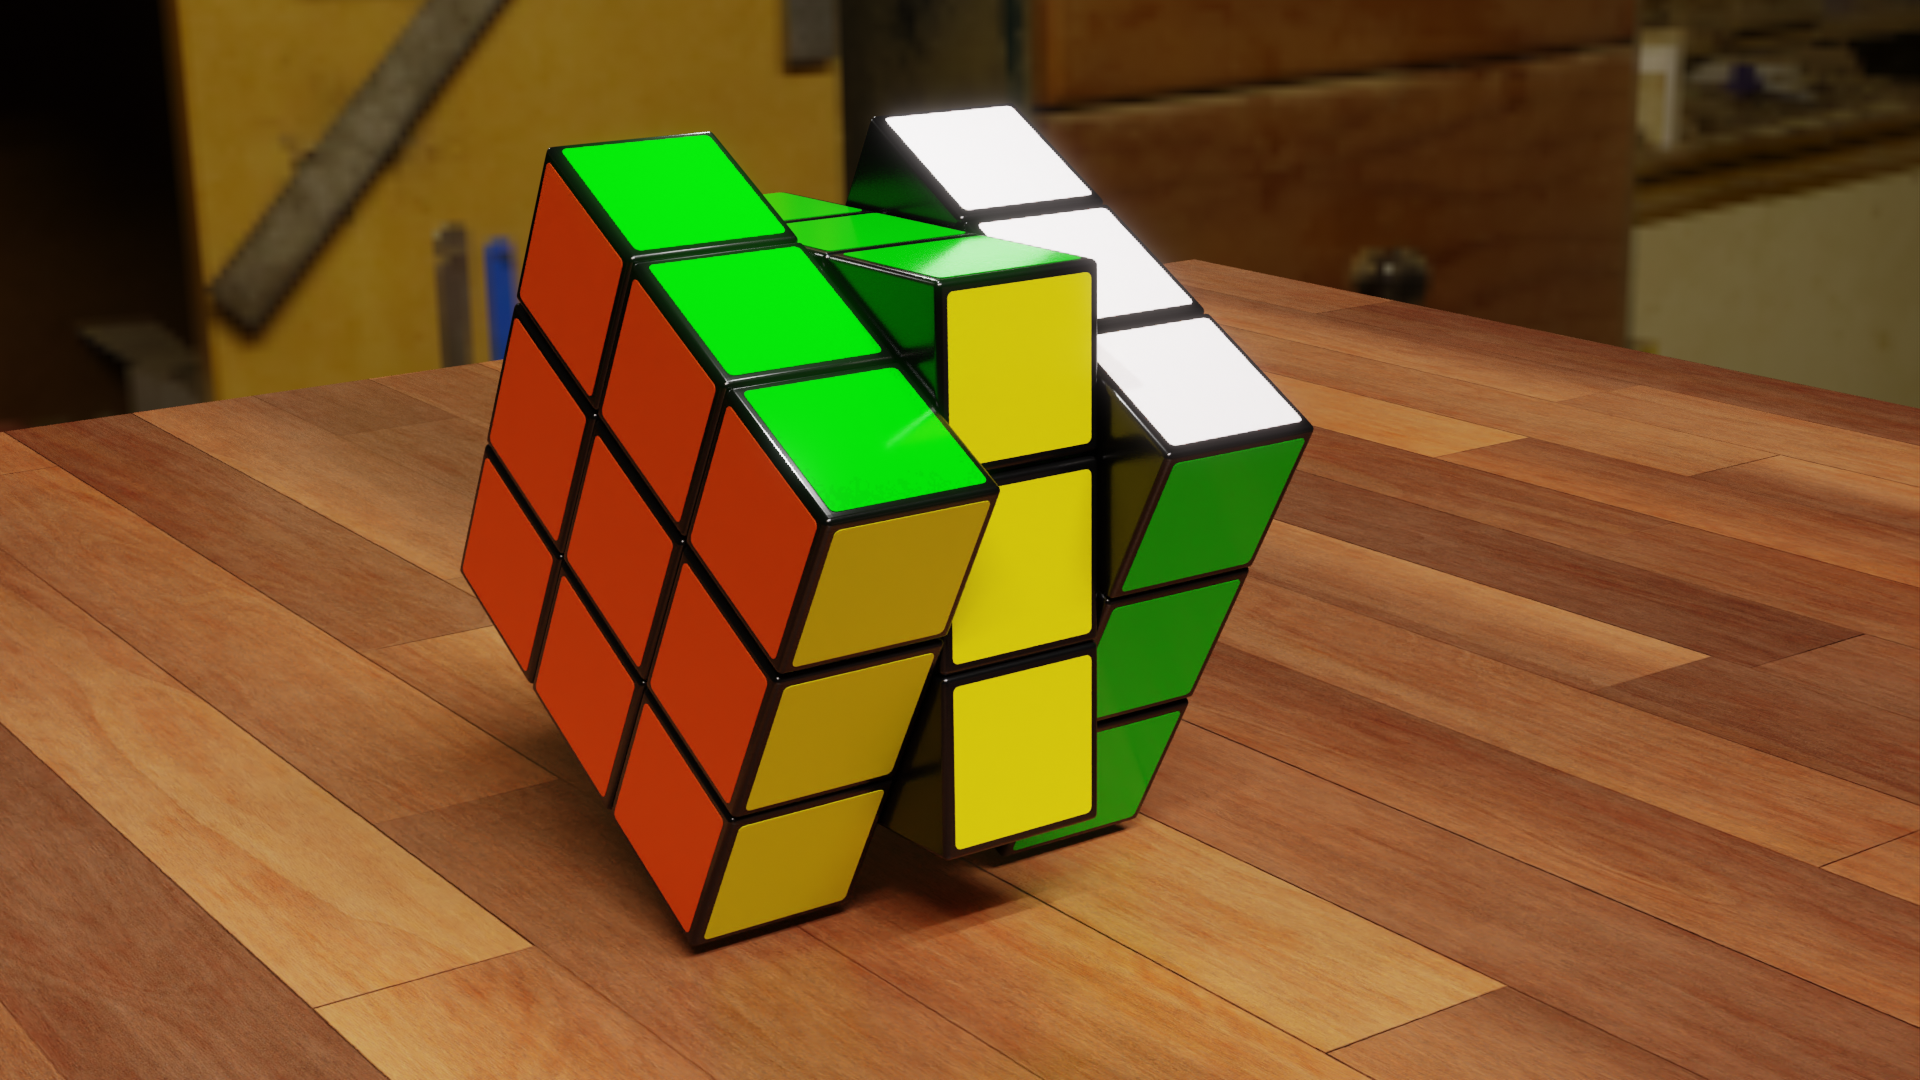 Rubix Cube preview image 1